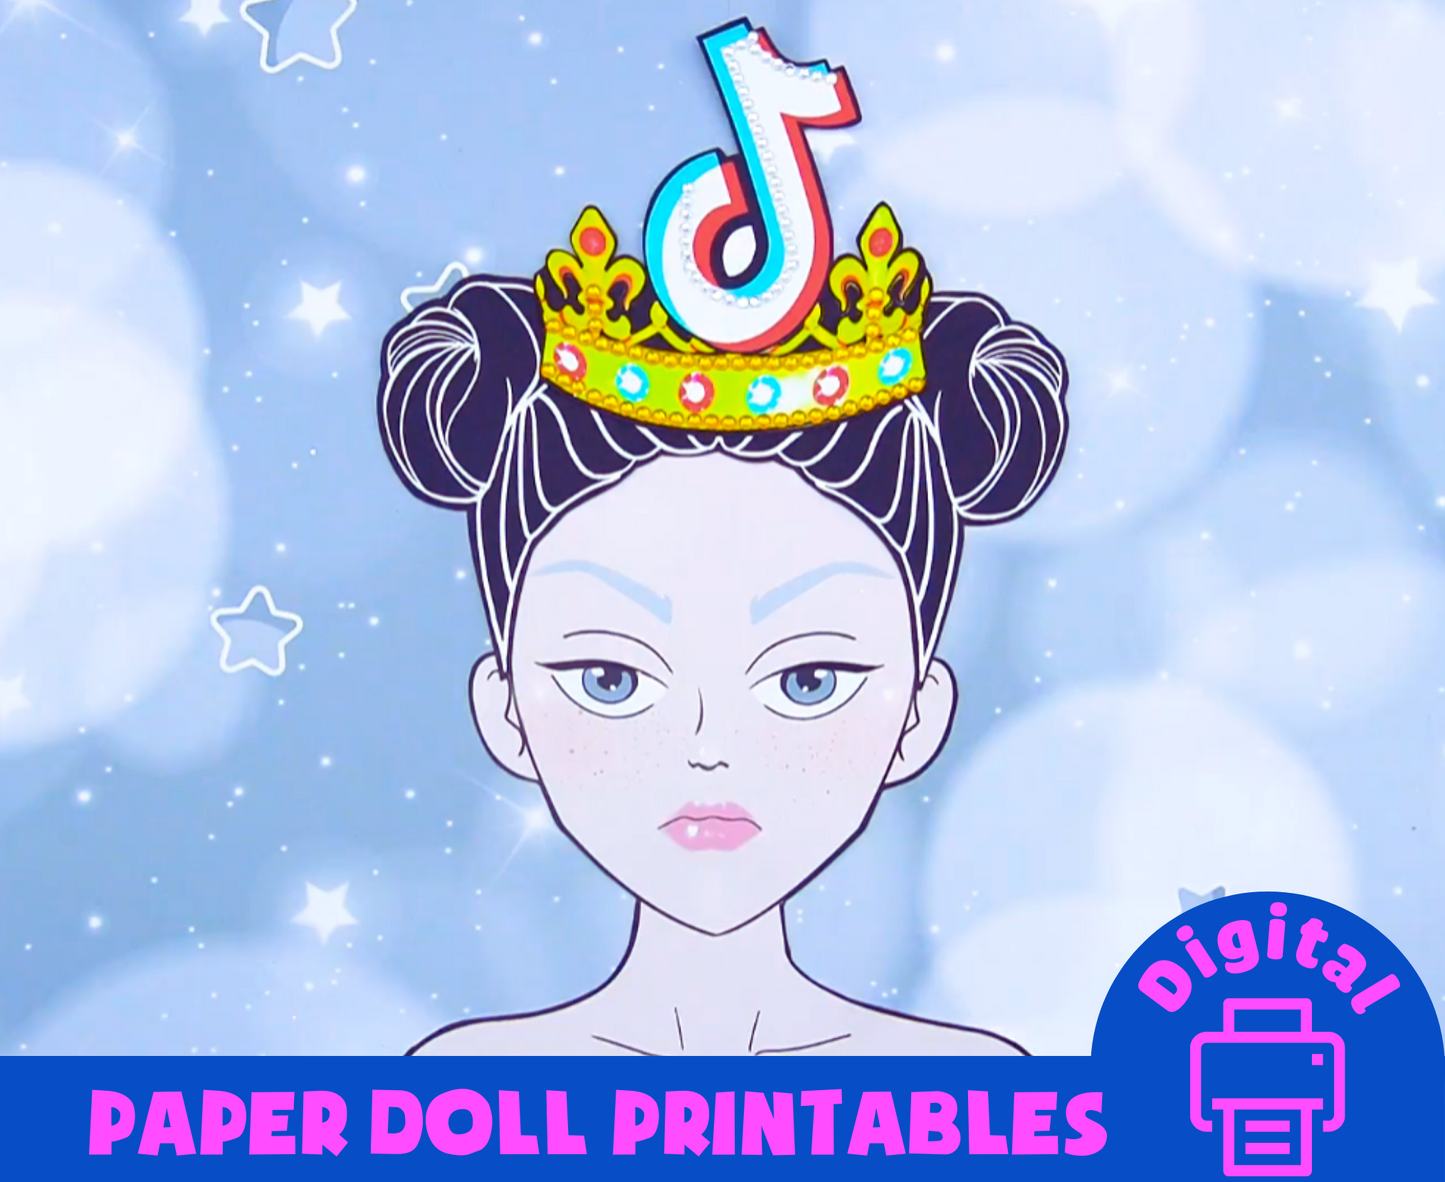 Instagram and TikTok Make-Up Kit Printables 🌈  Instant Download - Digital instagram template - Paper Crafts for Kids, Paper Doll House 🌈  Woa Doll Crafts